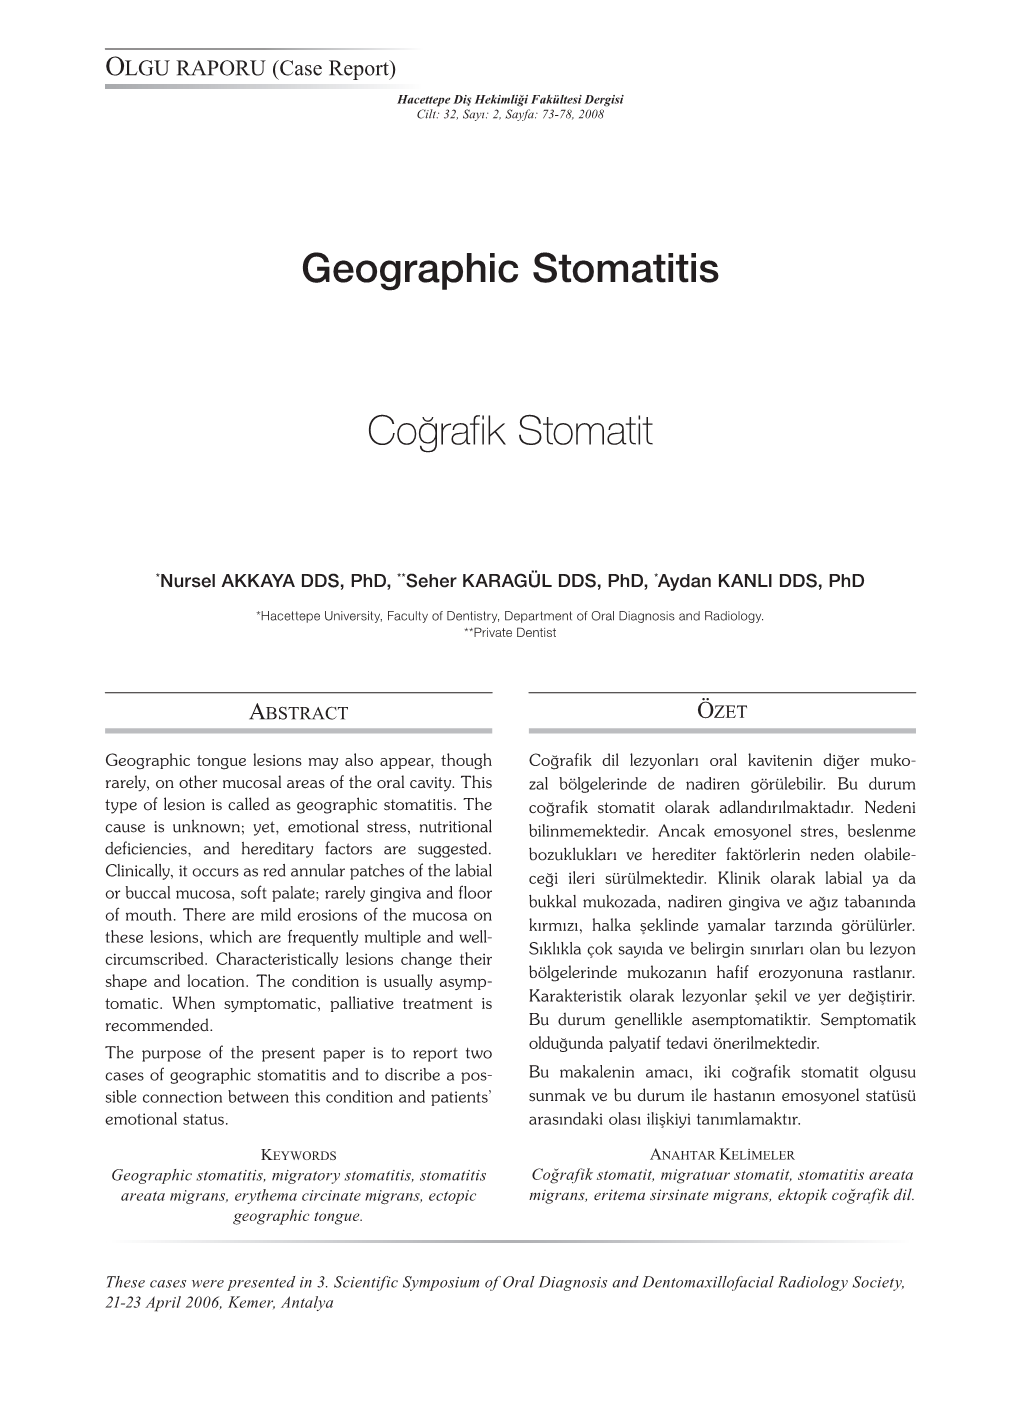 Geographic Stomatitis Coğrafik Stomatit